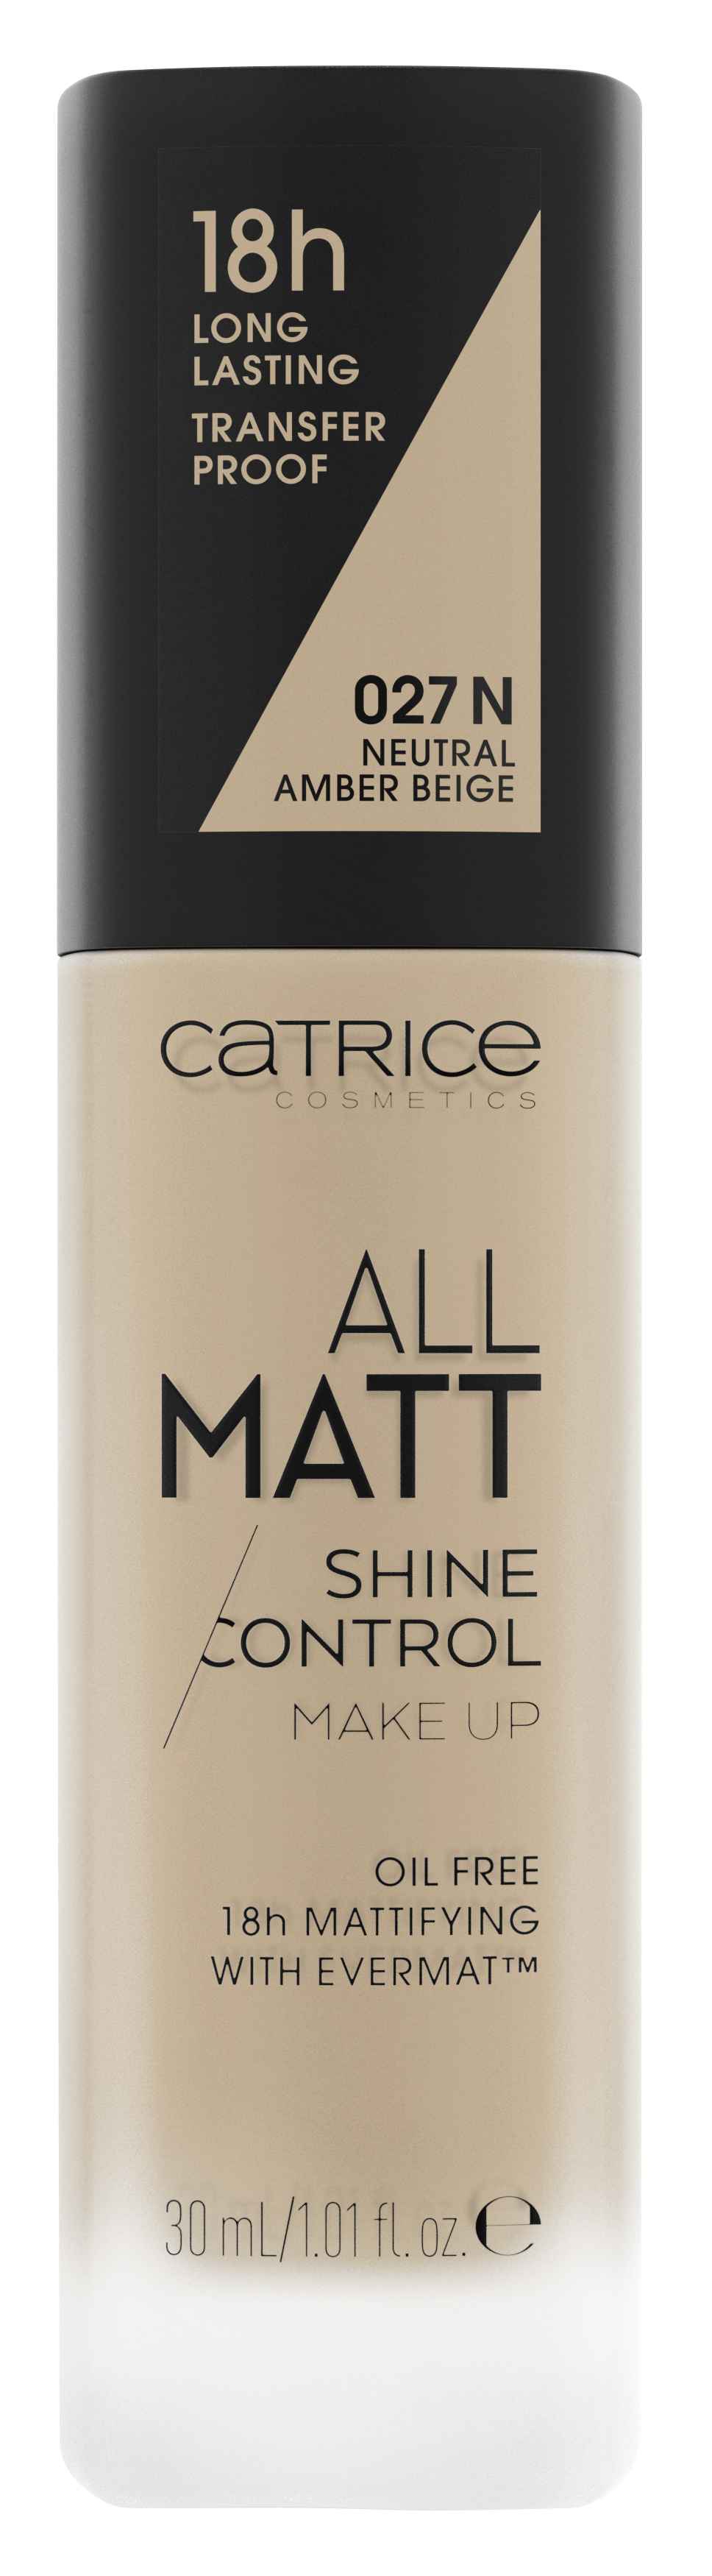 Catrice make-up All Matt Shine Control 013